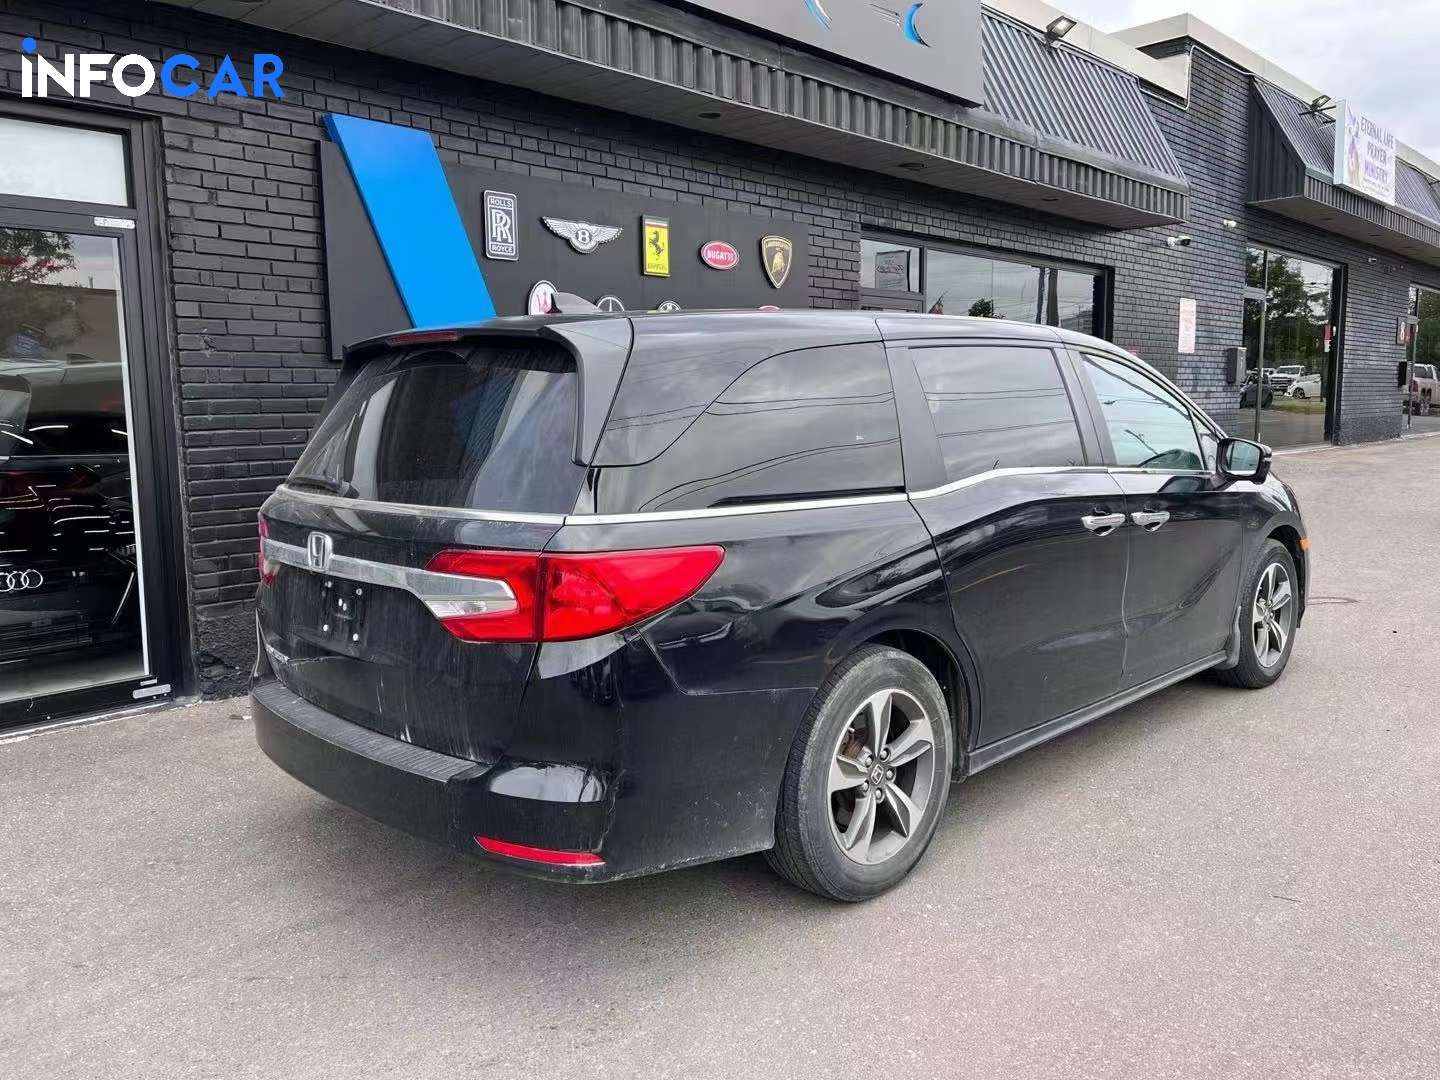 2019 Honda Odyssey Ex - INFOCAR - Toronto Auto Trading Platform